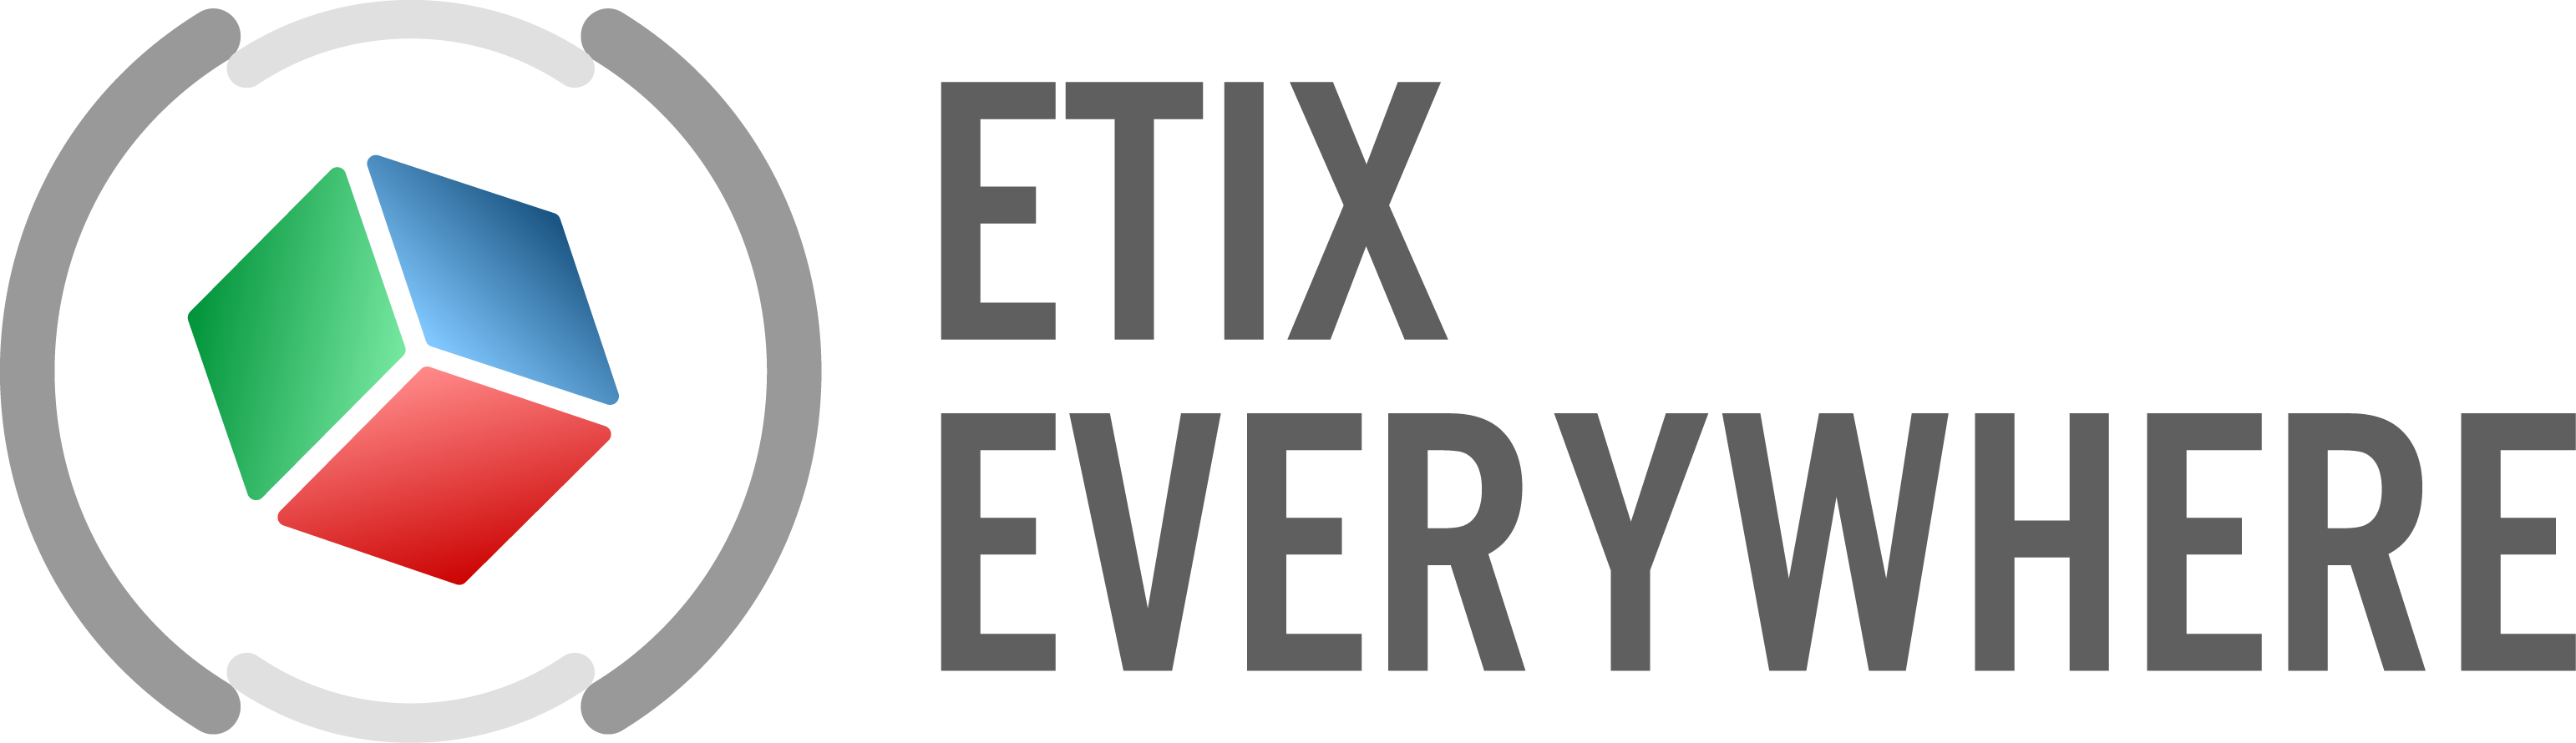 Logo ETIX Everywhere